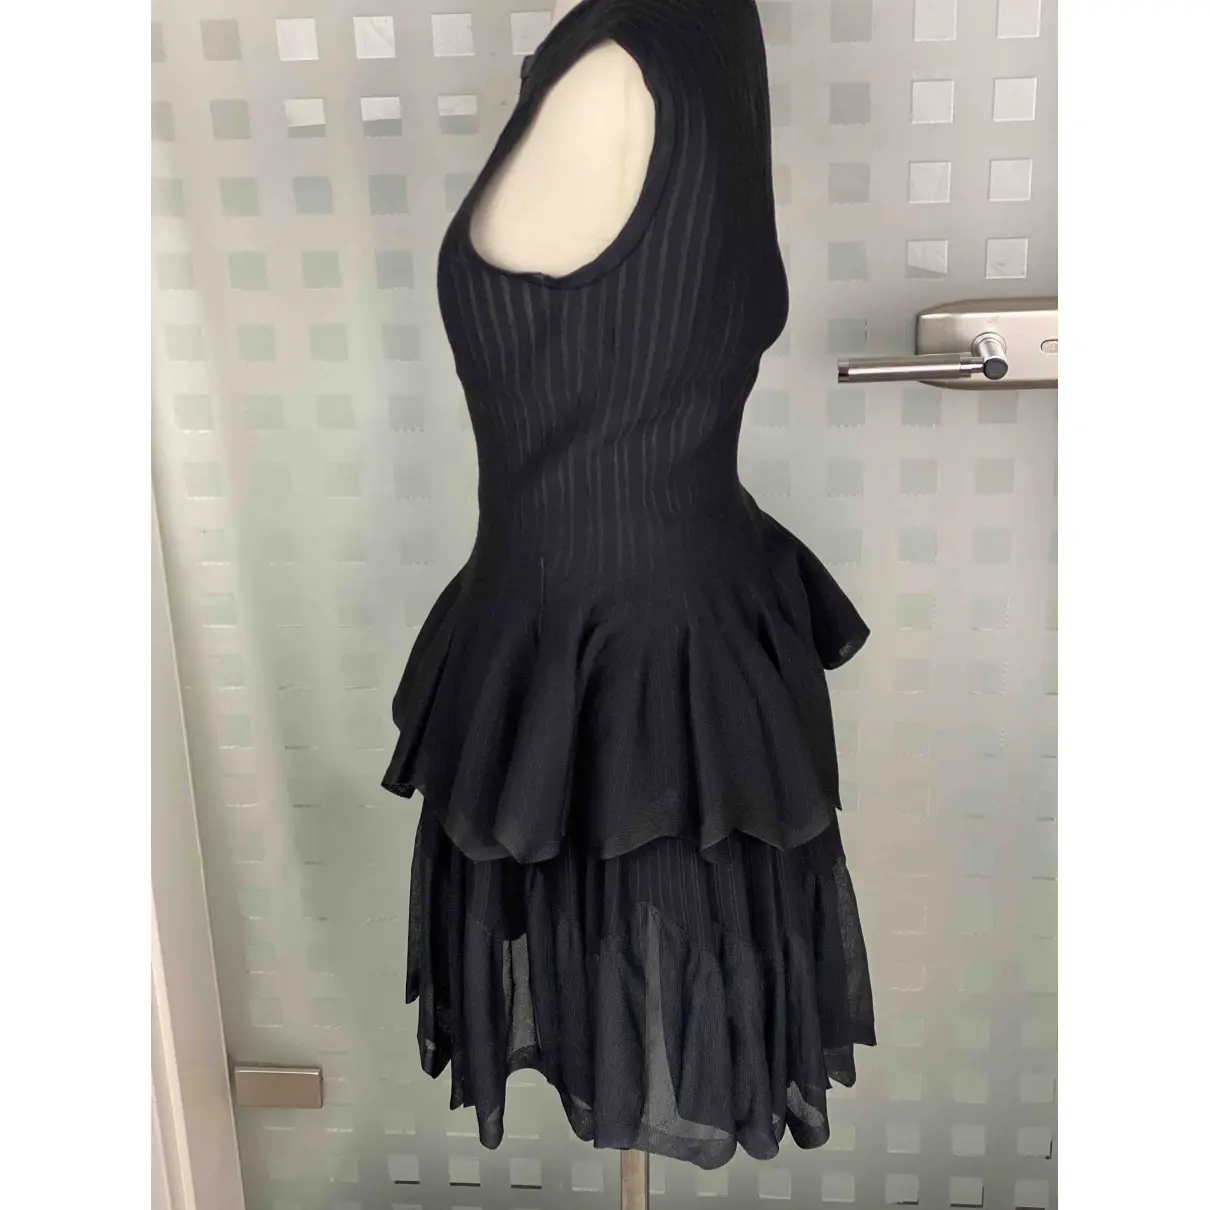 Buy Alaïa Mini dress online